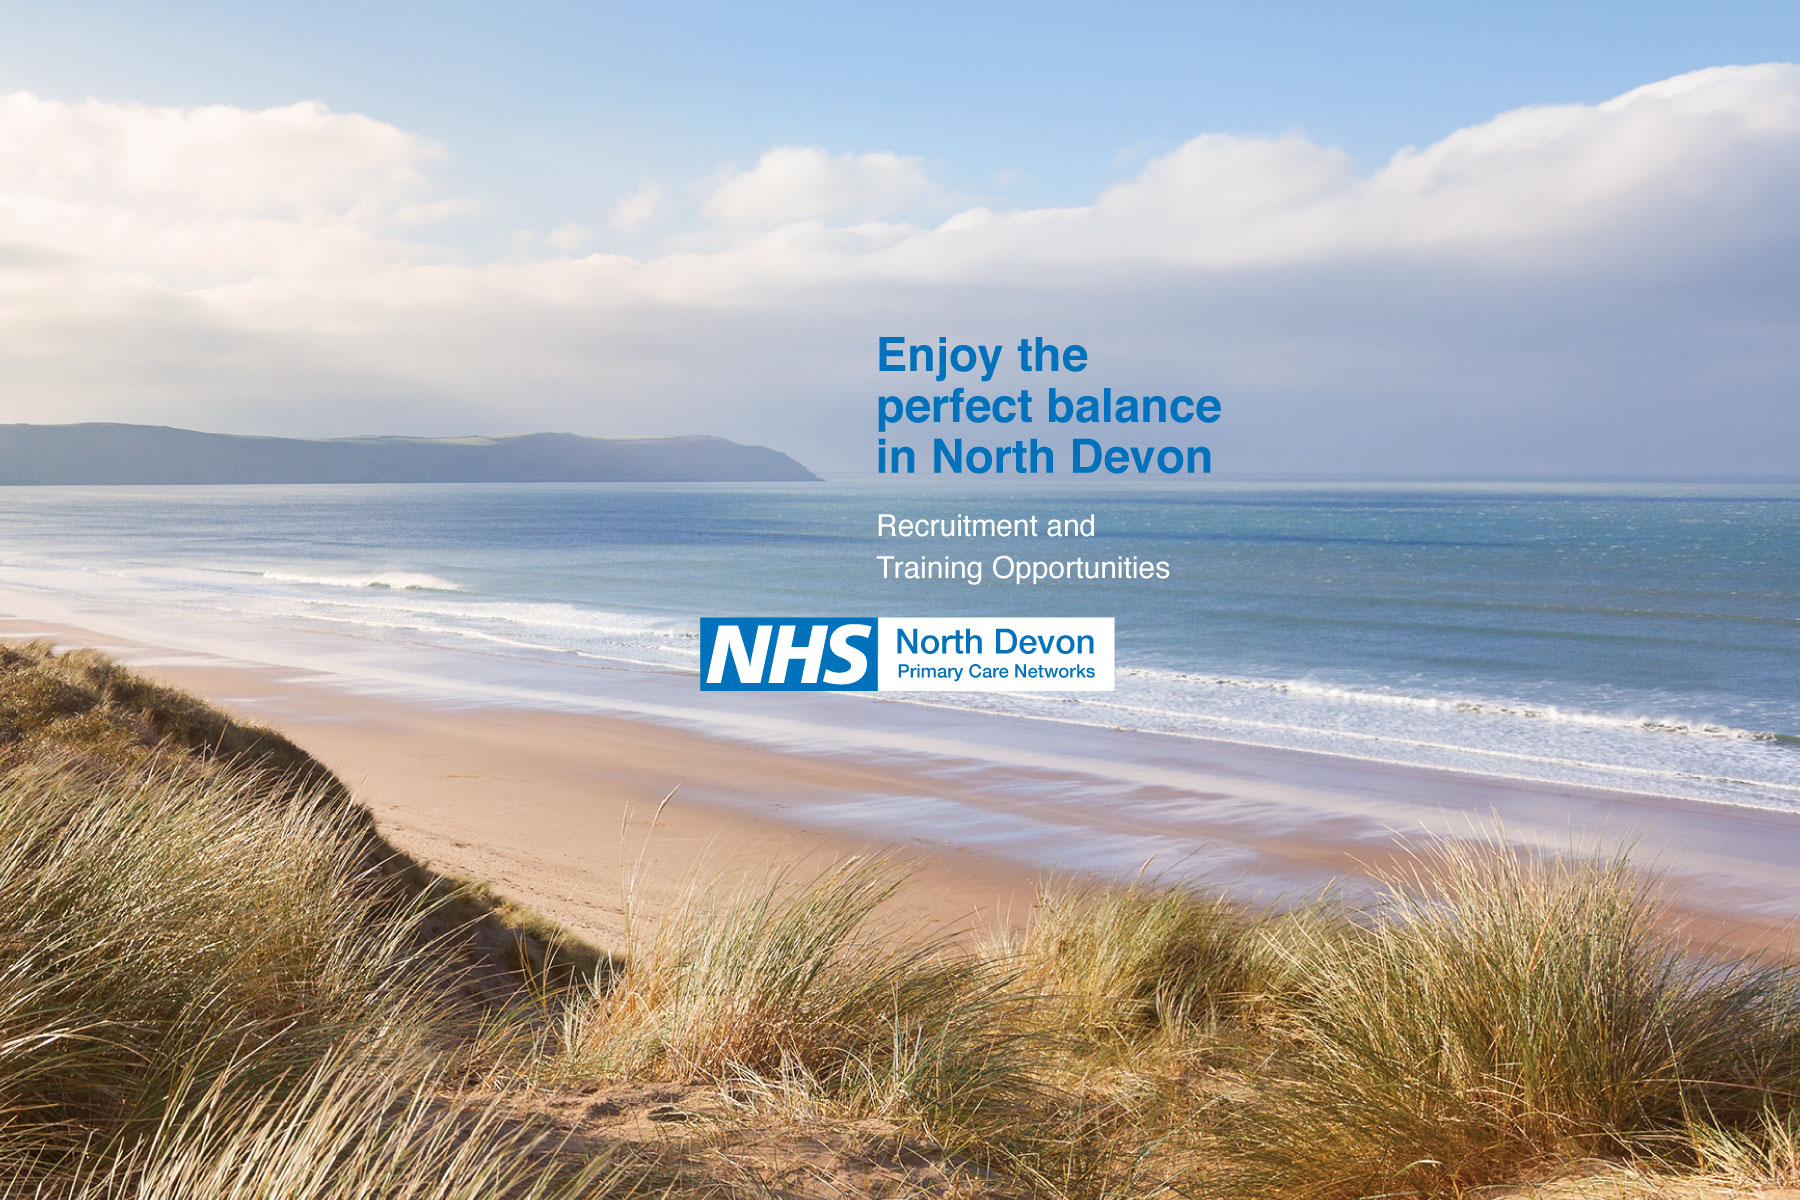 NHS promotion image of North Devon beach